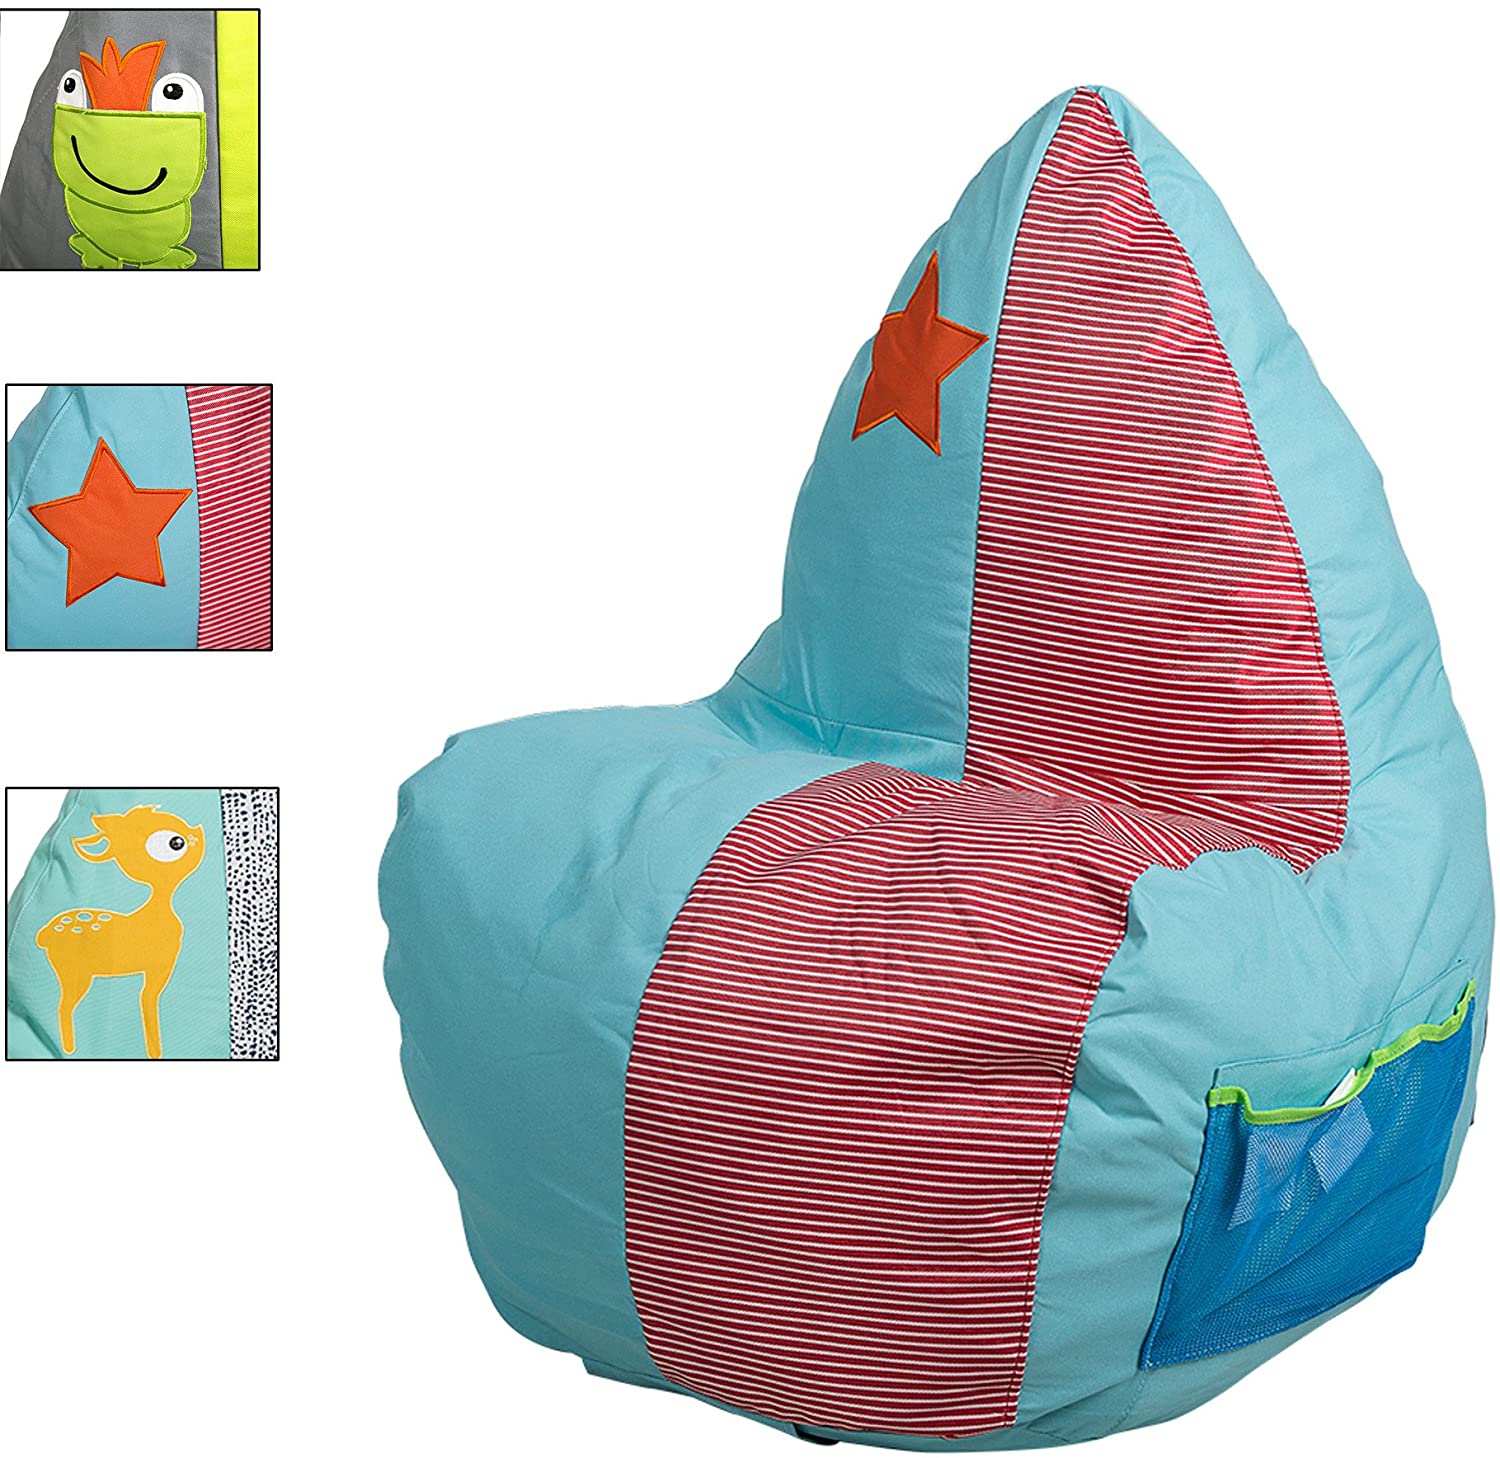 Soft Kids Bean Bag Chair Children Lounger Chairs Sofa - 3 Types - Self-Rebound Sponge, Star